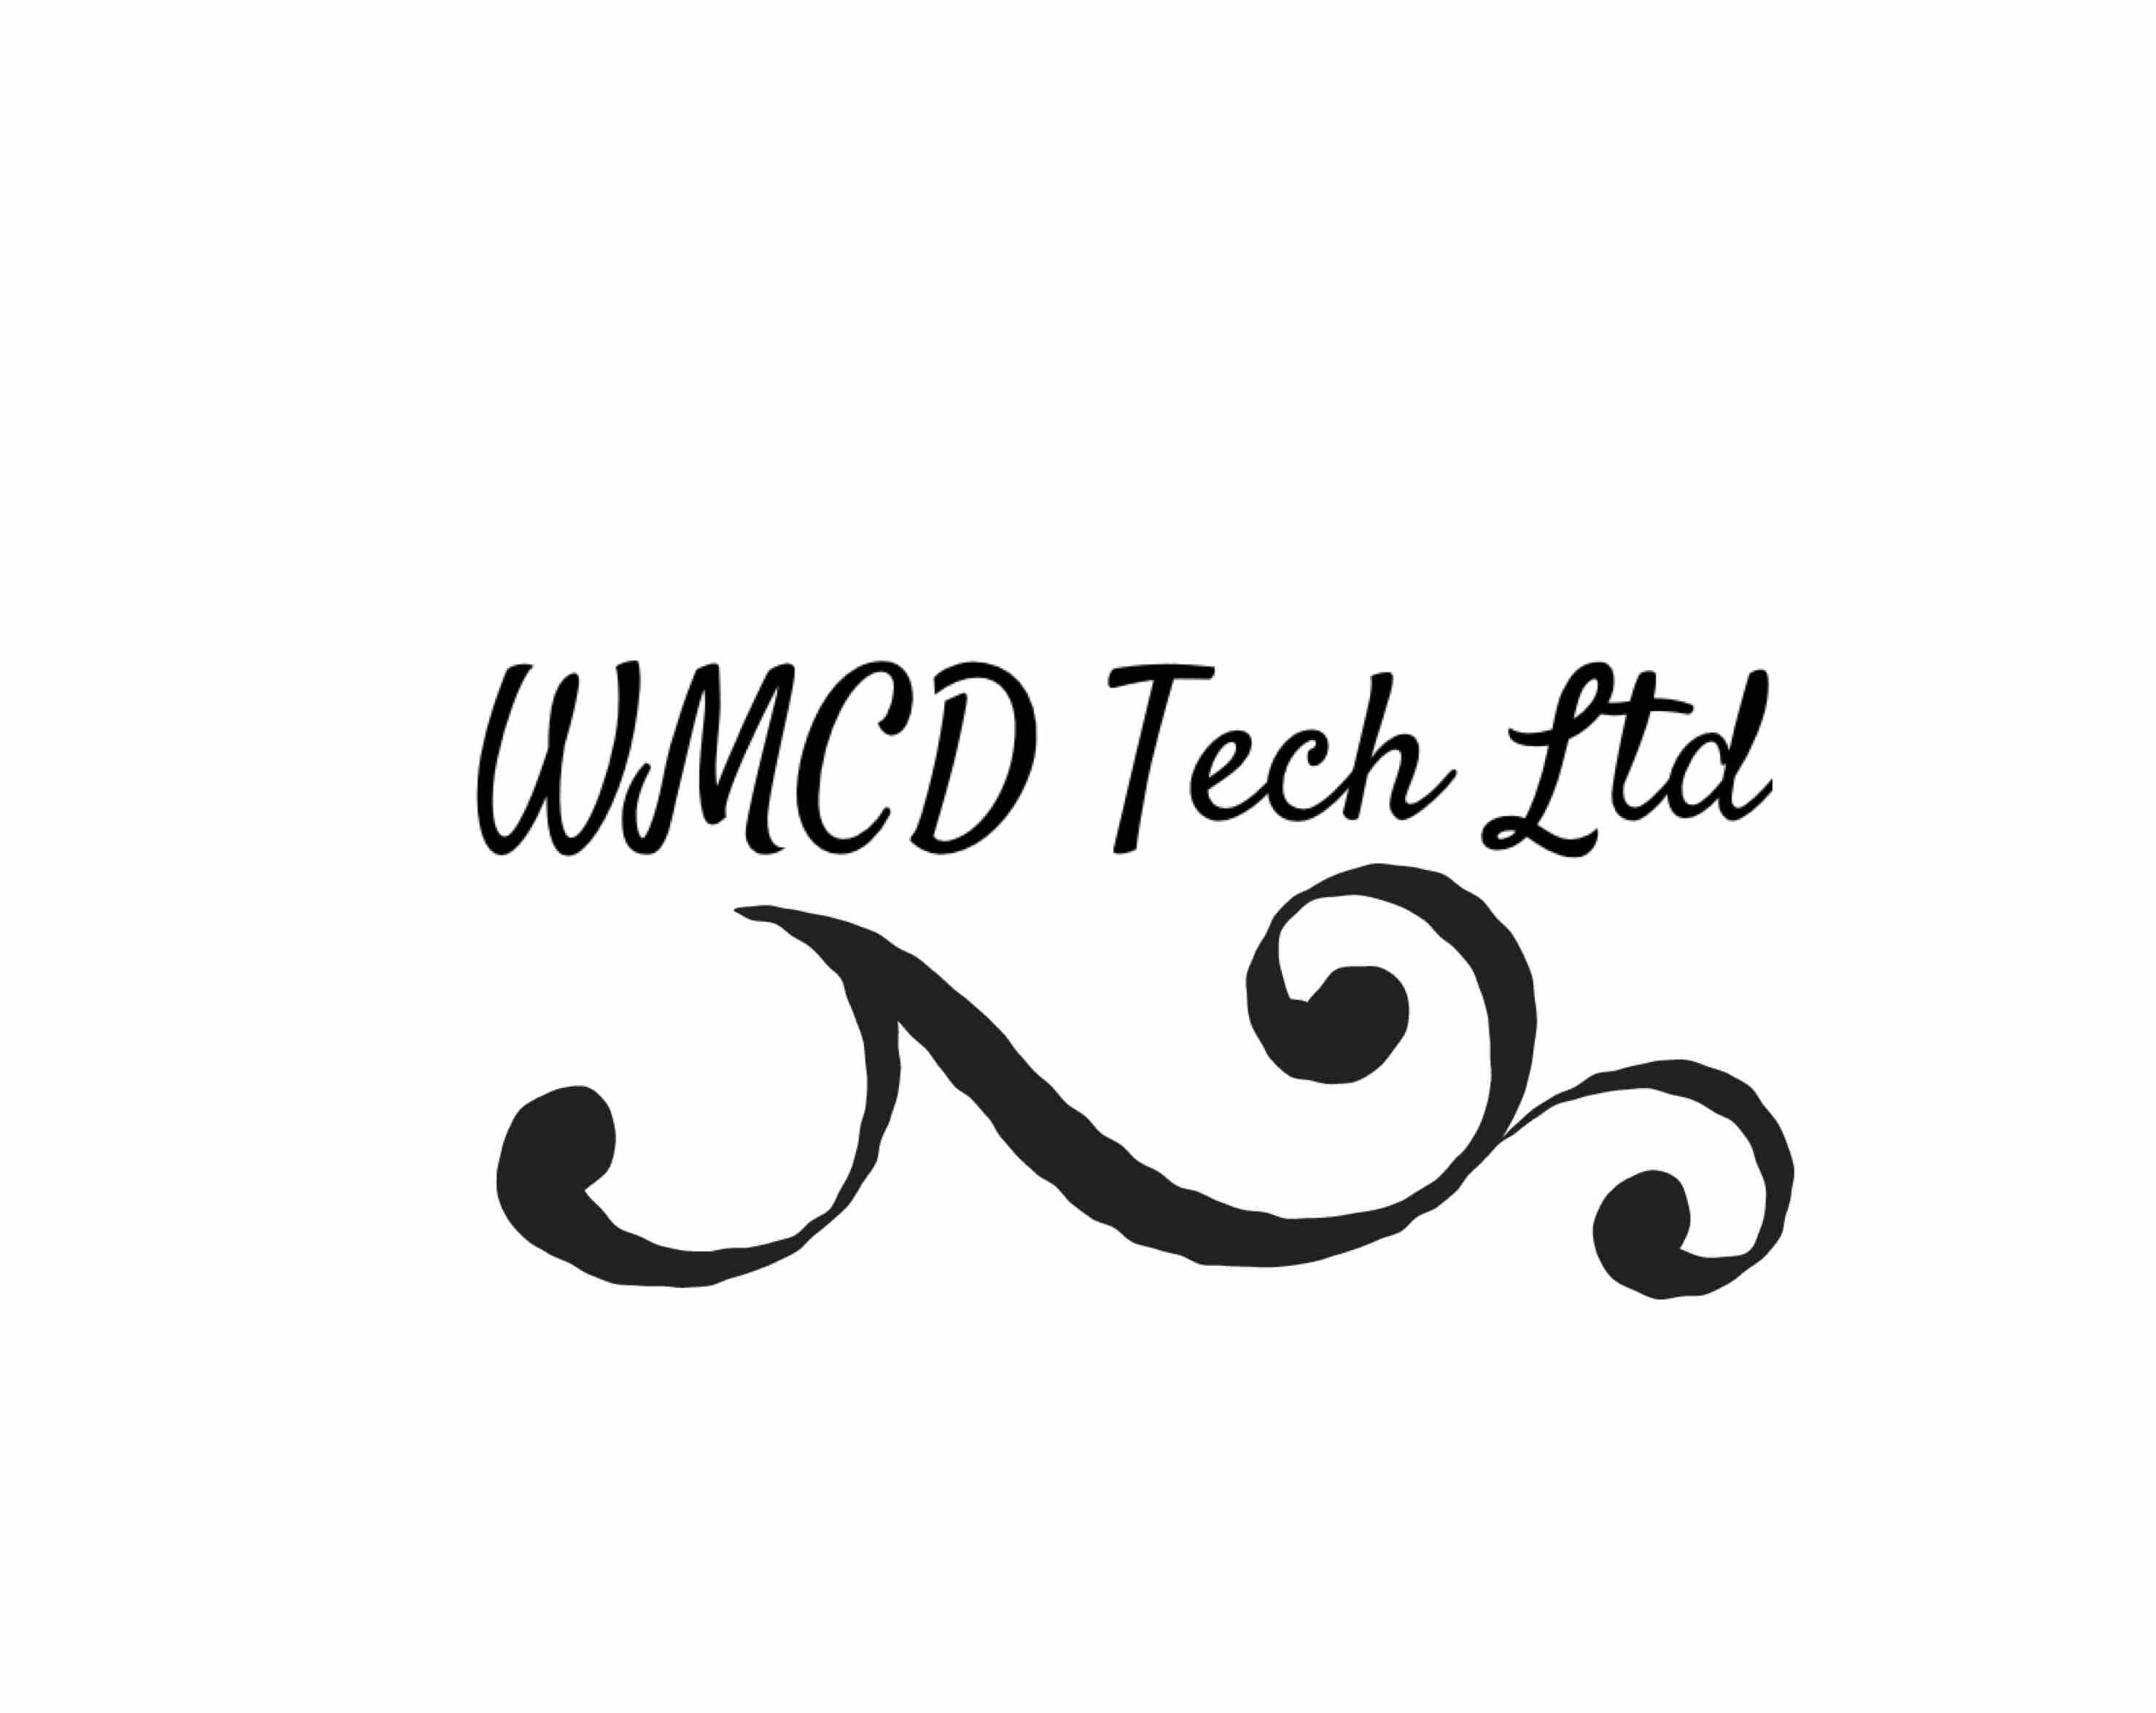 WMCD Tech Ltd